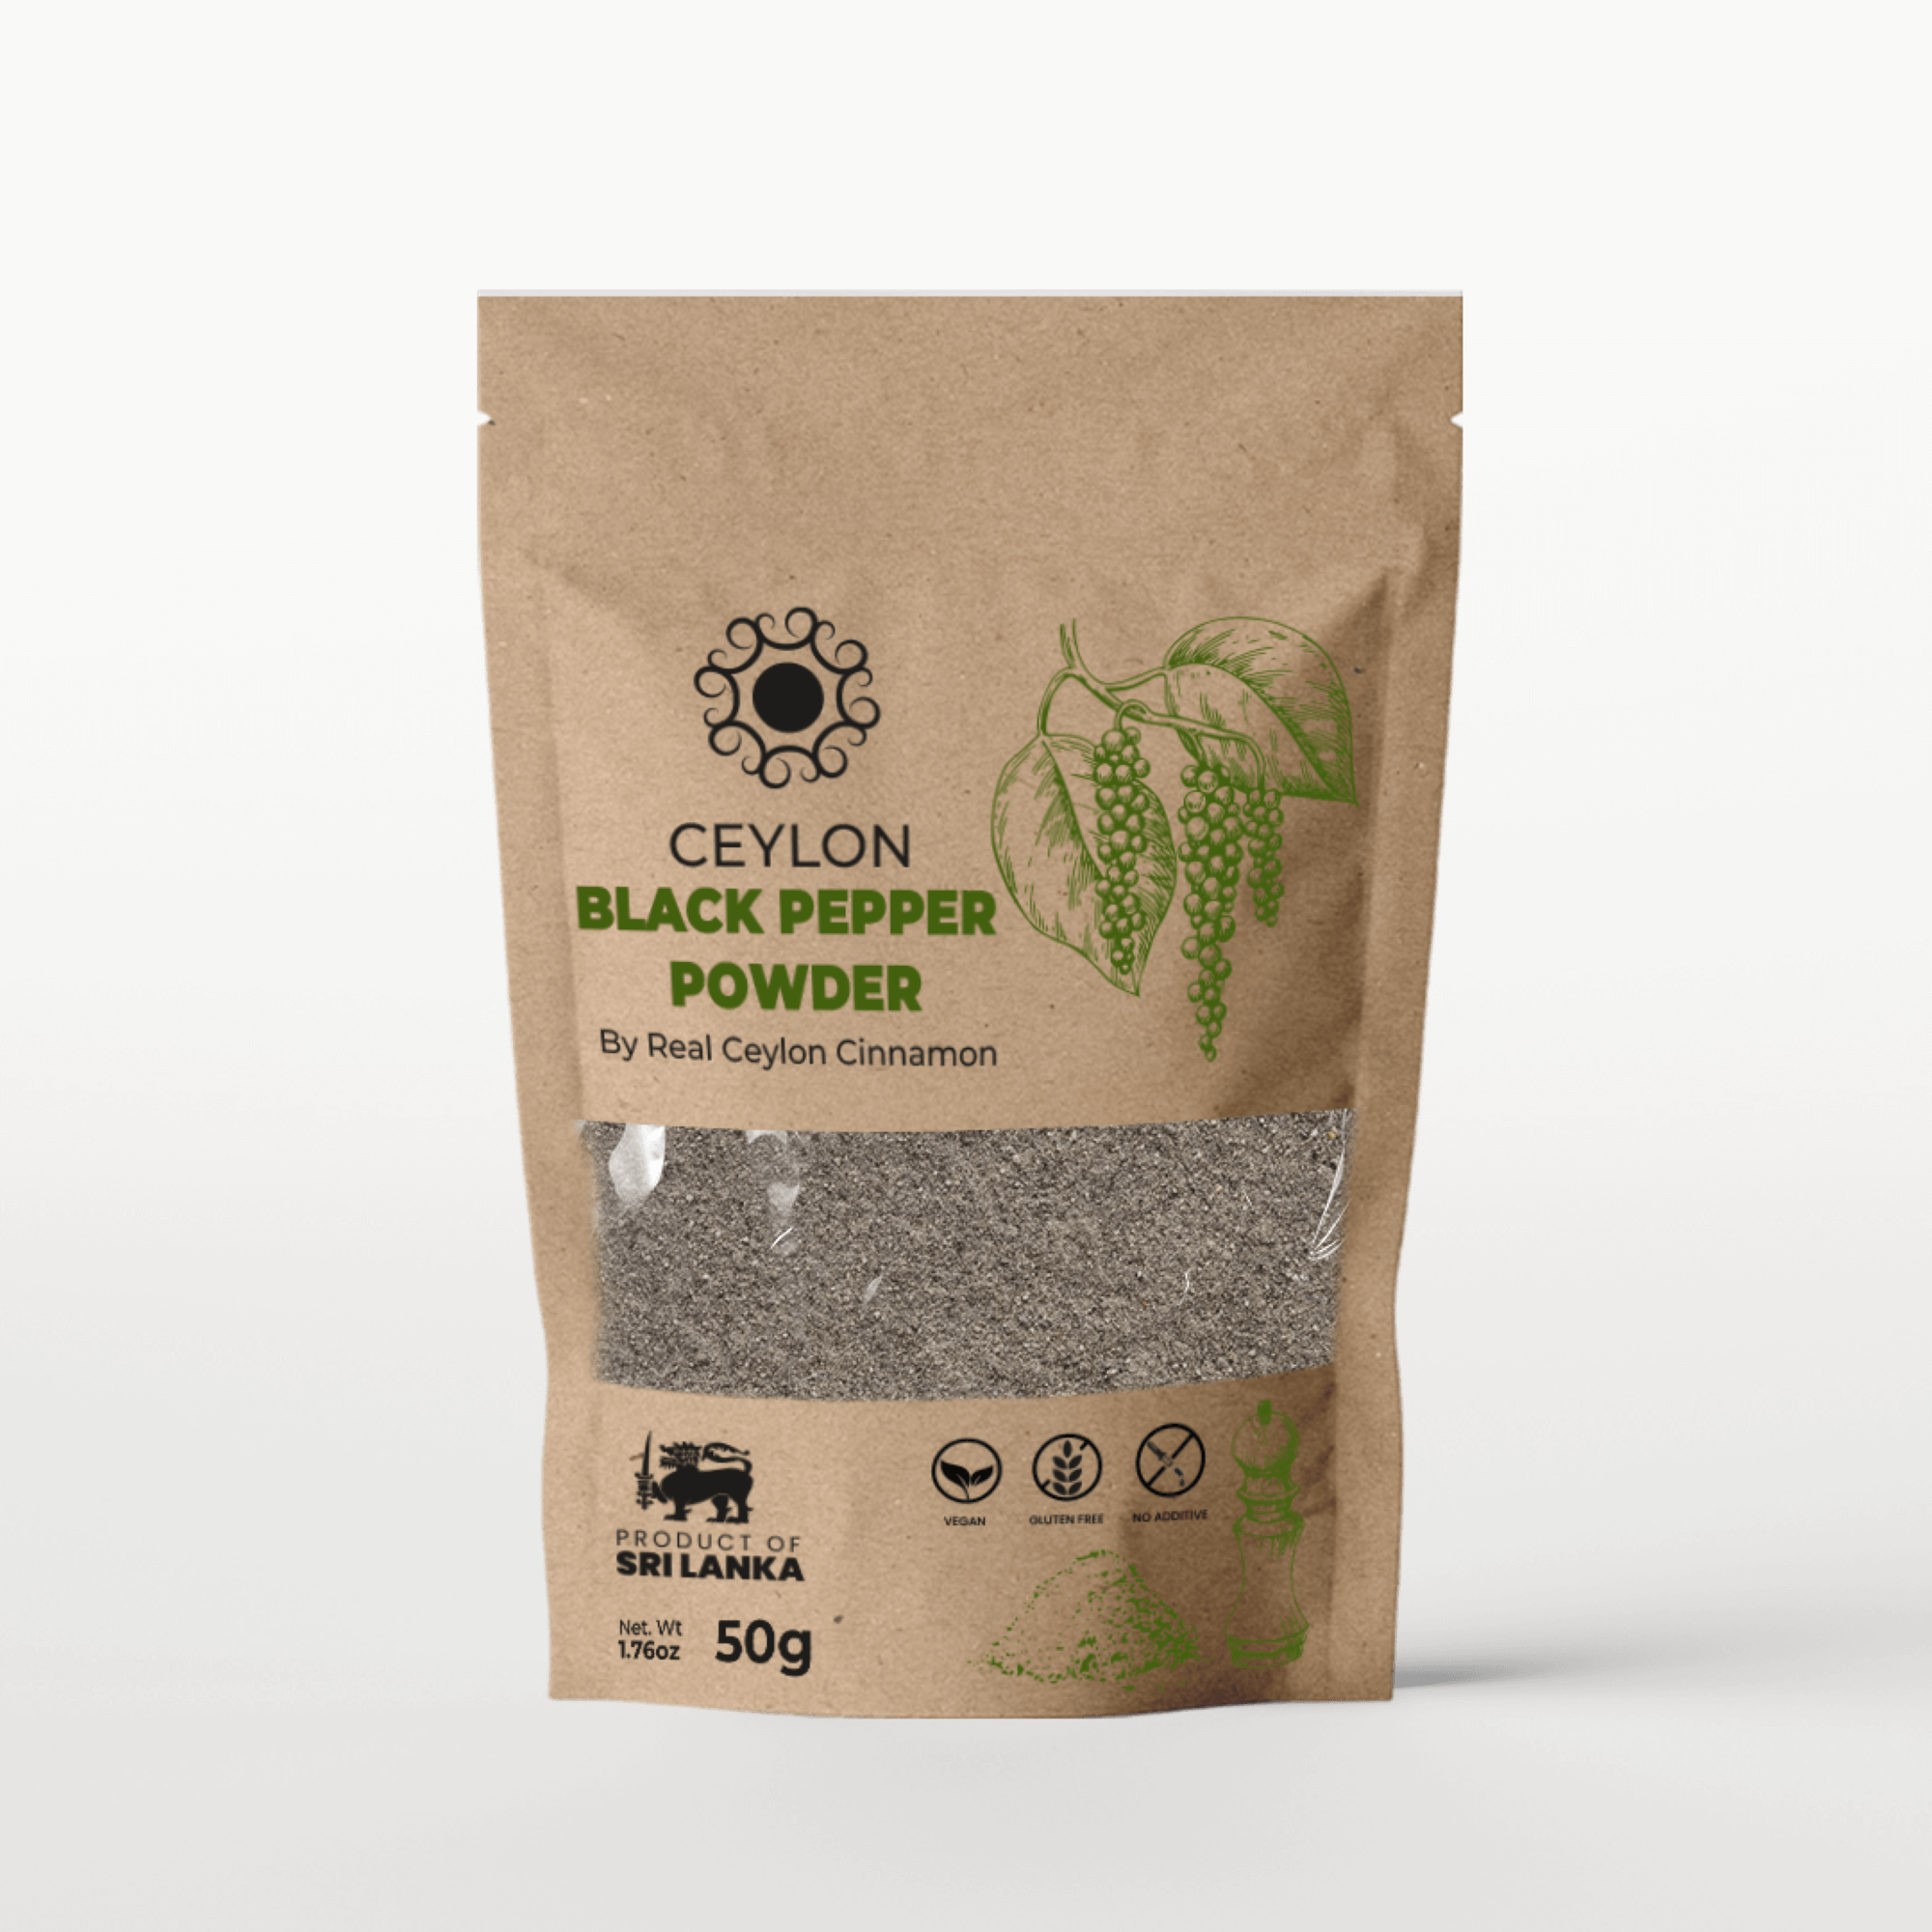 Black pepper powder 50g